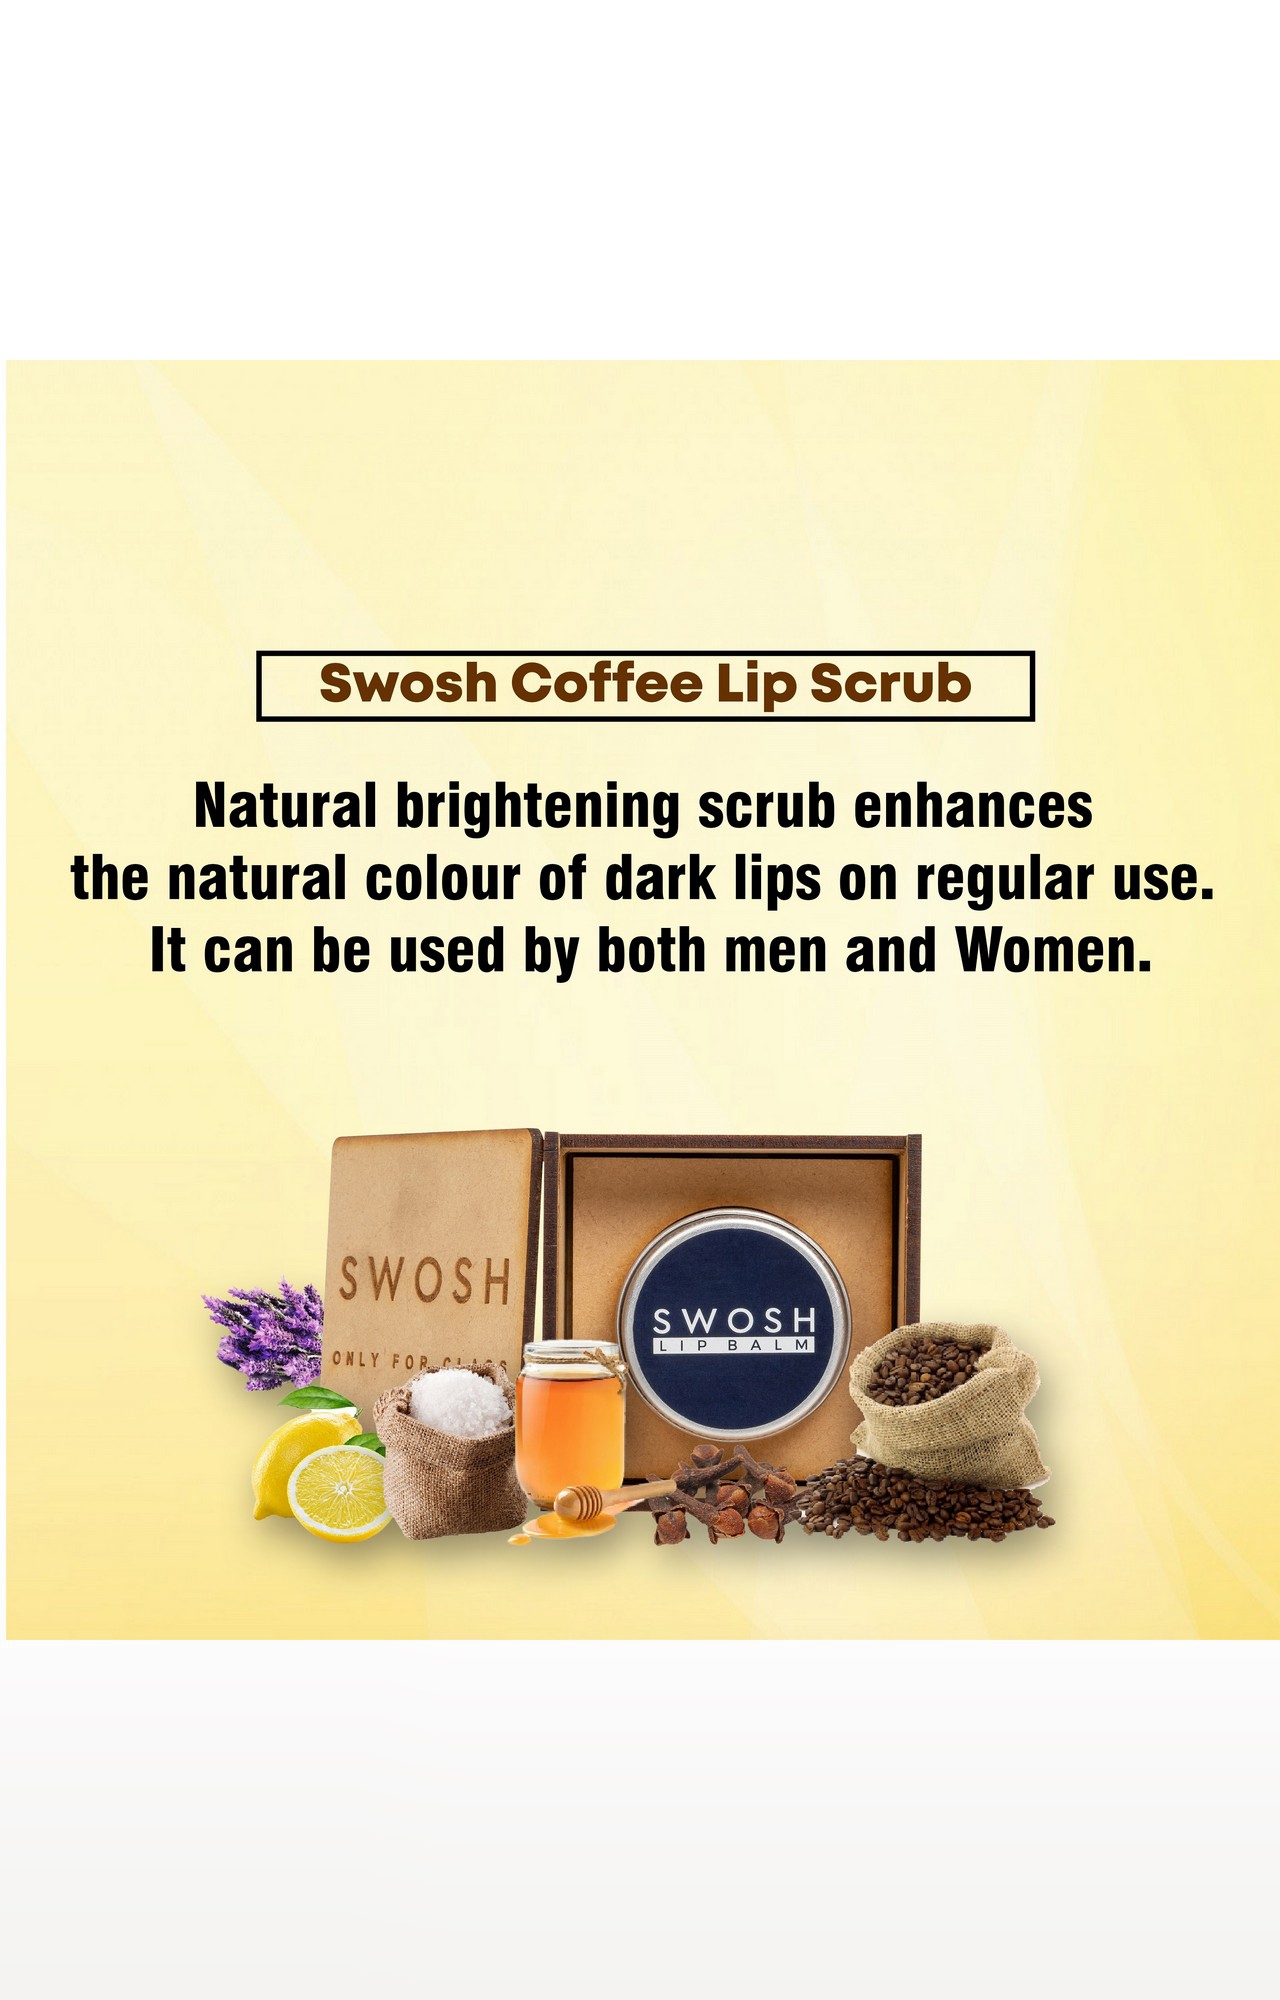 Swosh Organic Lip Balm For Lightening & Brightening Dark Lips For Men & Women, 15 G With Natural Coffee Extract, Clove Oil, Lavender Oil, Sugar Lip Balm